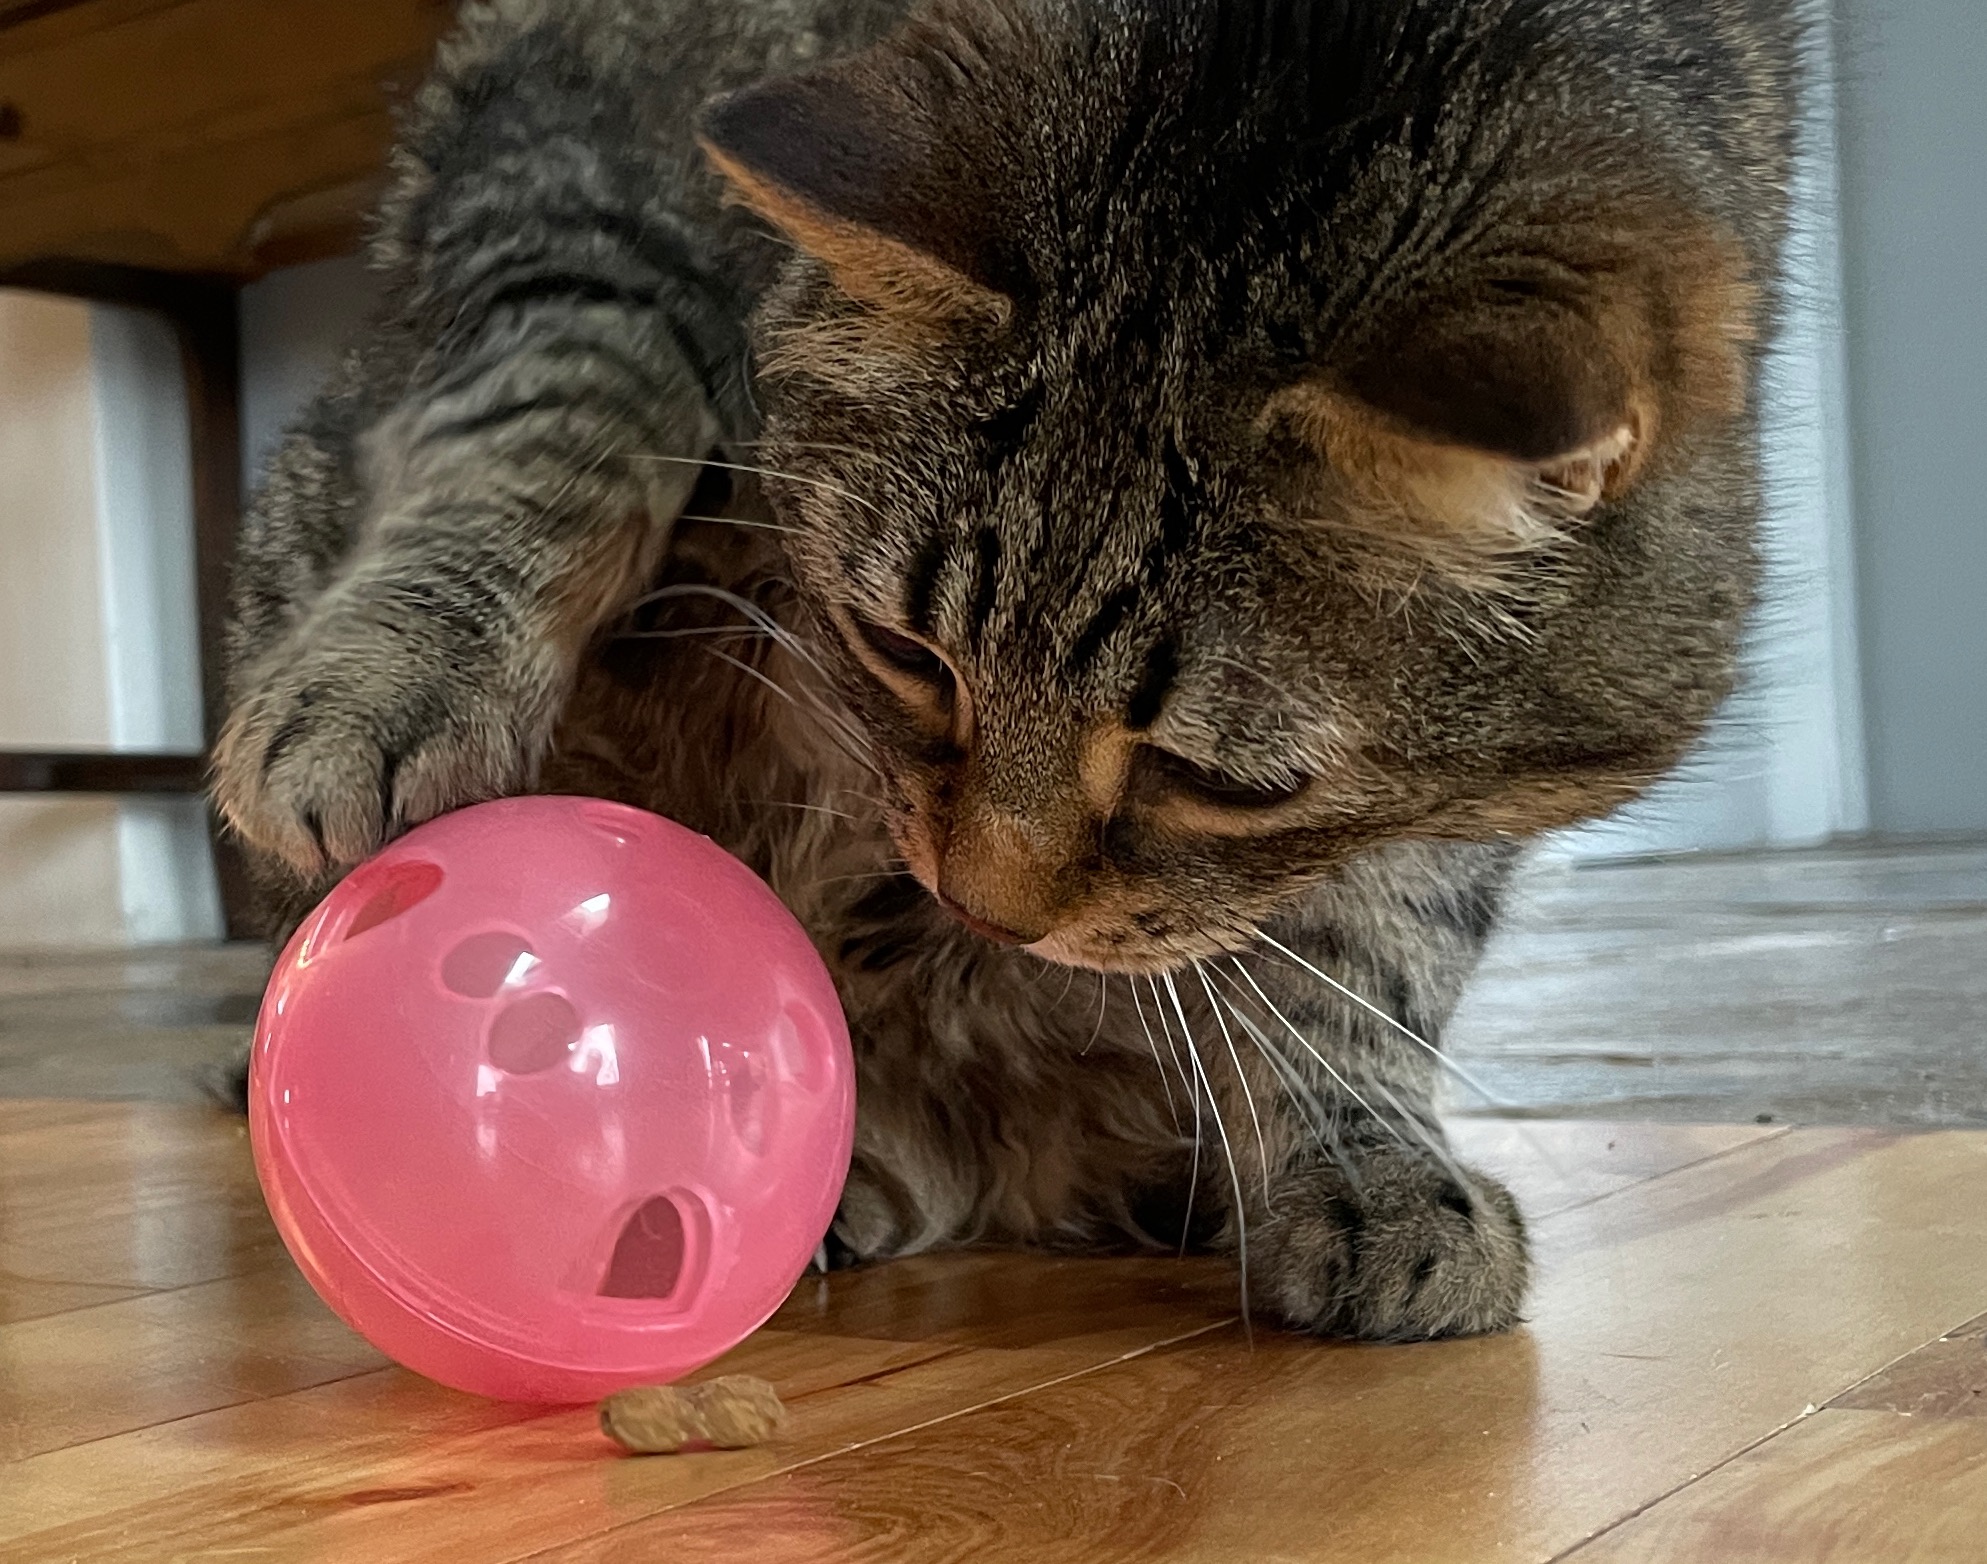 PetSafe Cat Fishbowl Feeder Toy